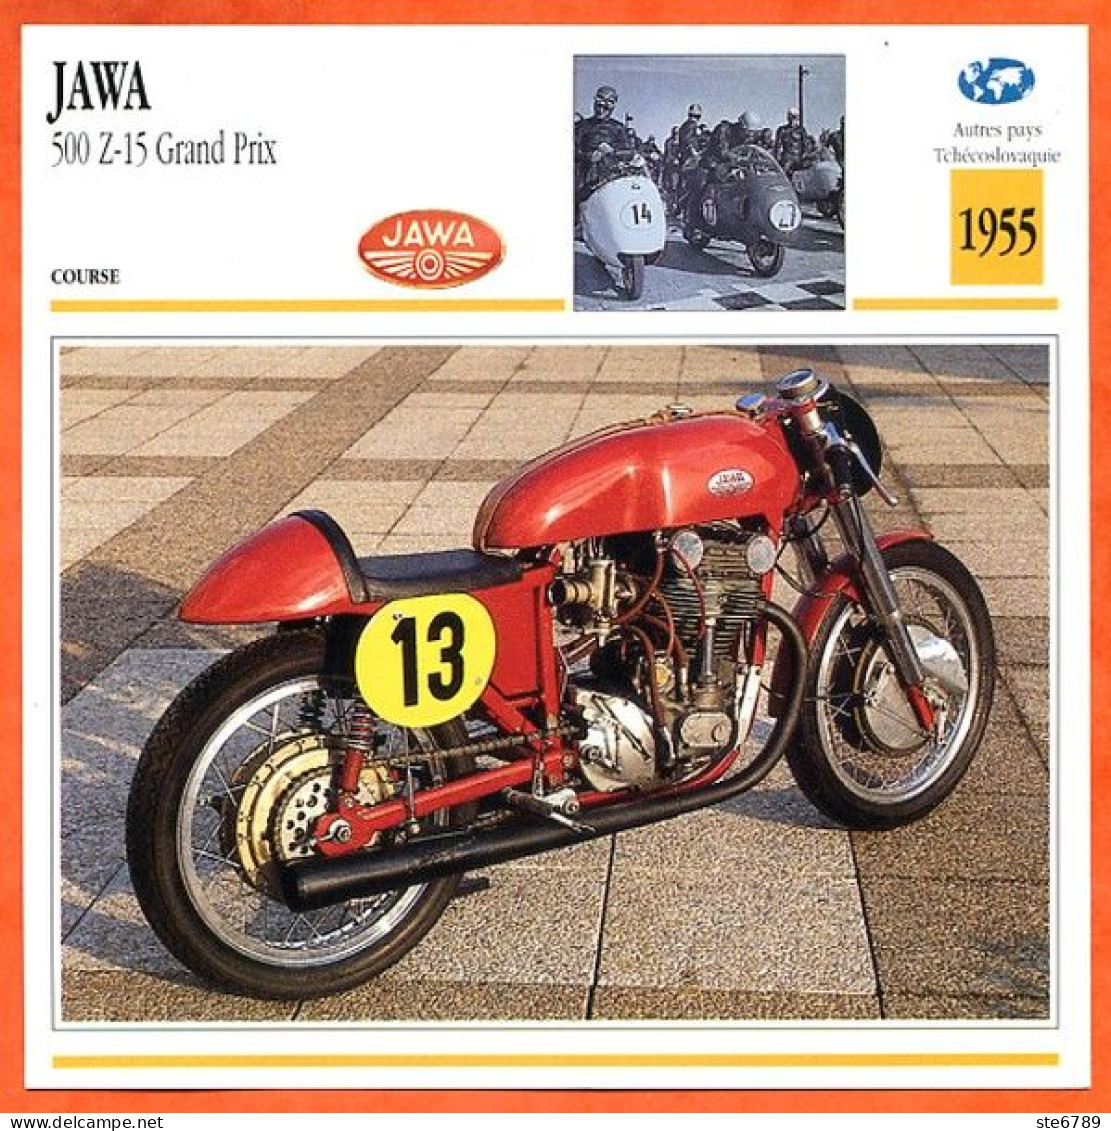 JAWA 500 Z-15 Gd Prix 1955 Tchécoslovaquie Fiche Technique Moto - Sports